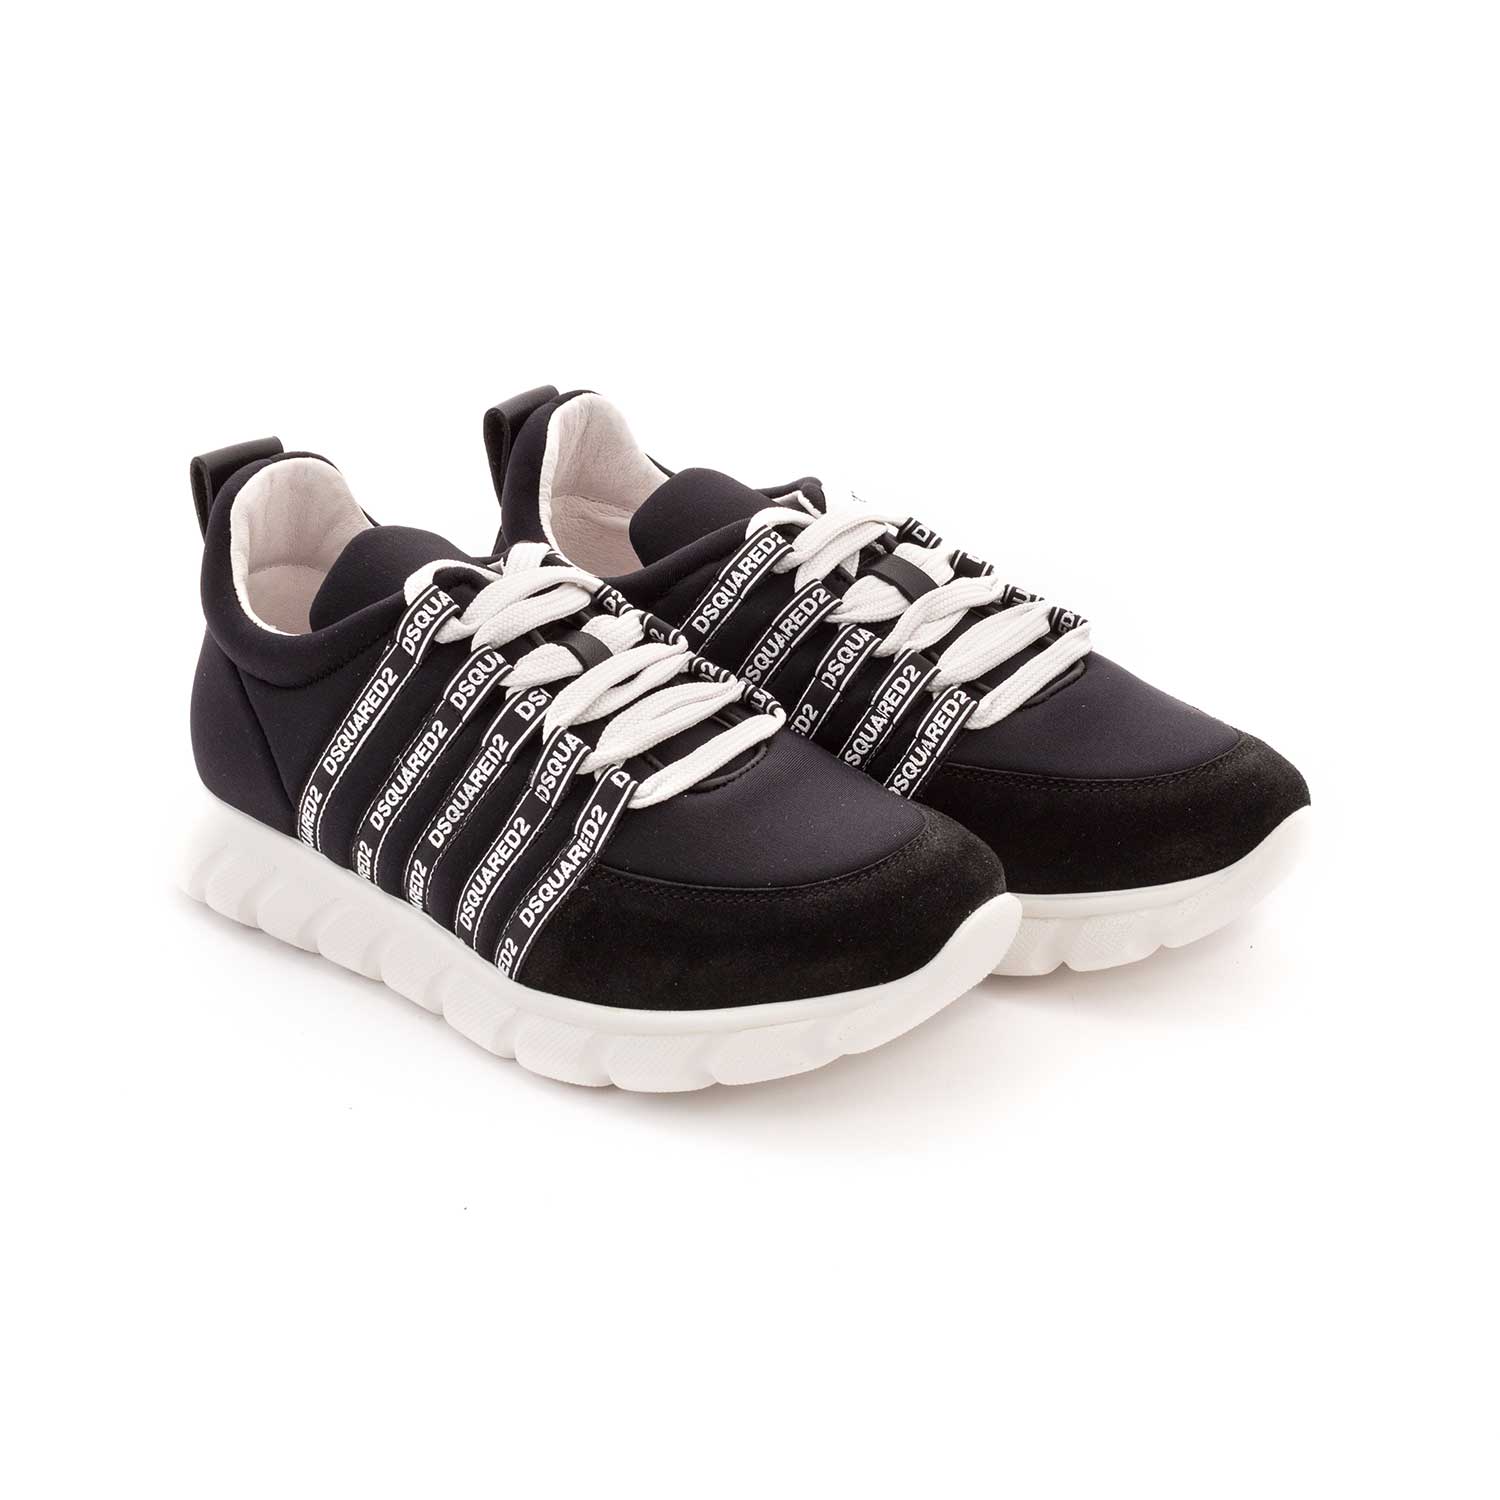 Dsquared2 - Scarpe Sneakers Nere Unisex - annameglio.com shop online